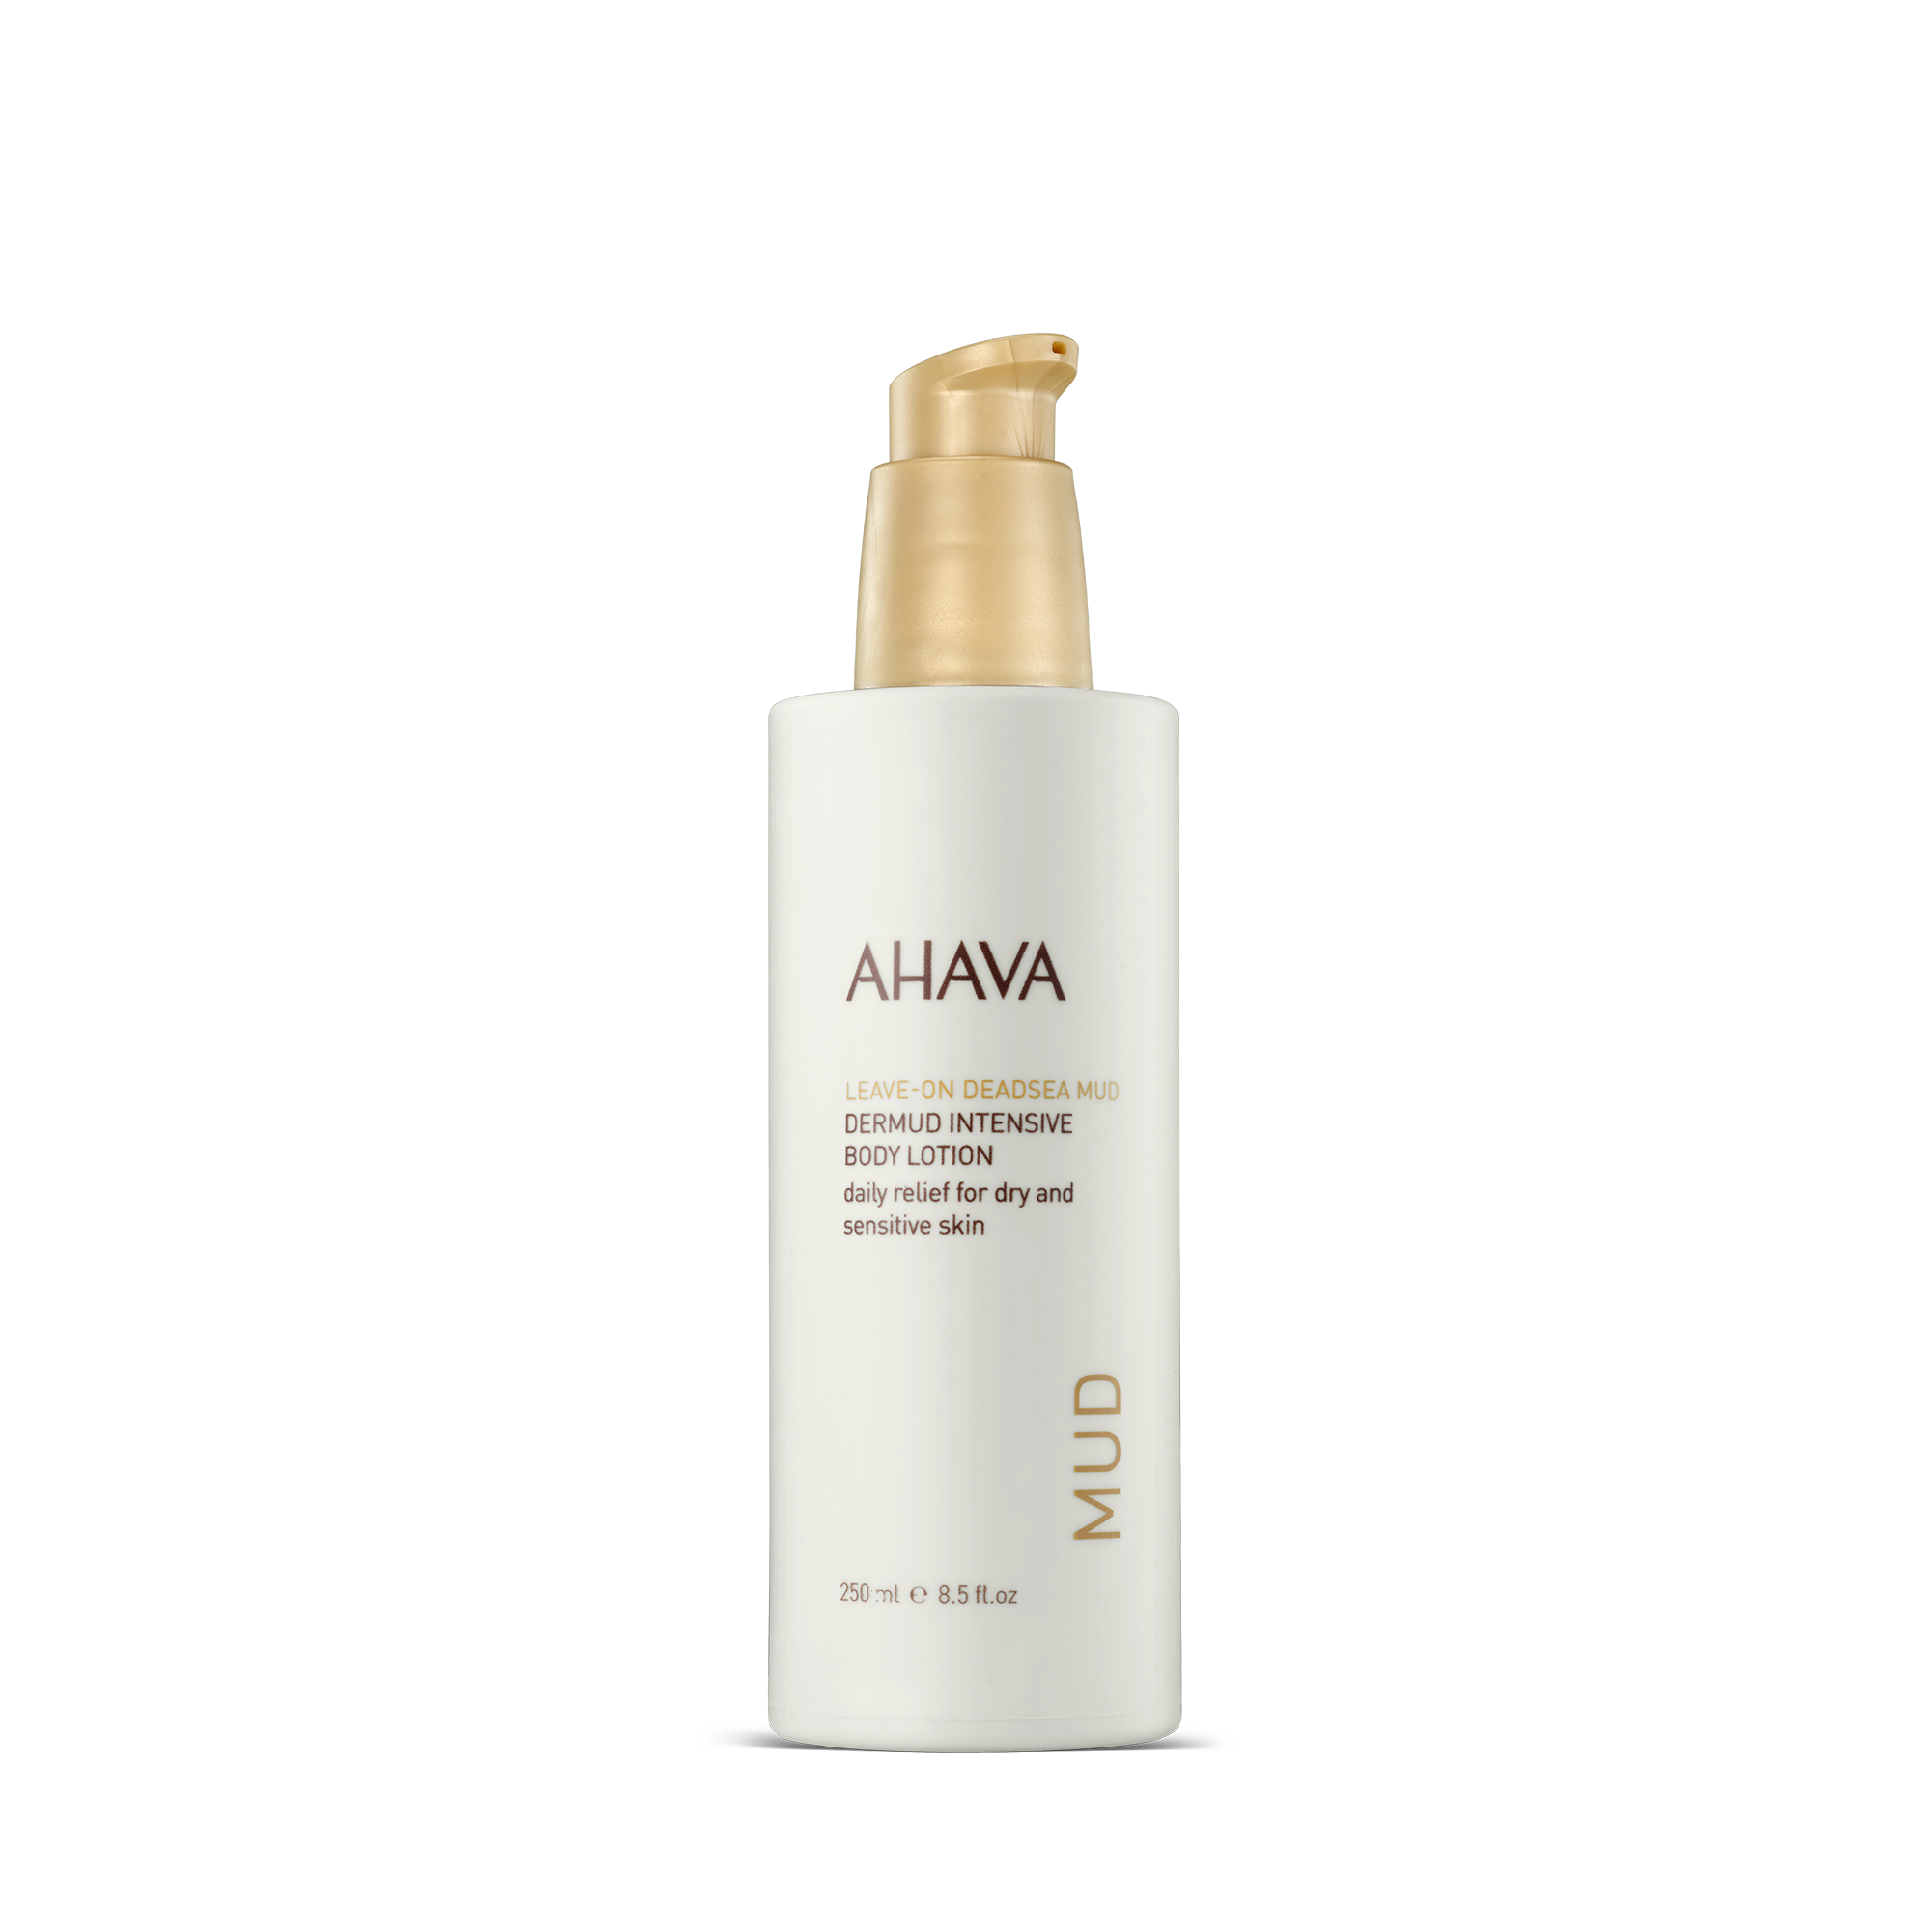 Global Dead Lotion Mud AHAVA® Dermud – Intensive AHAVA Body Sea